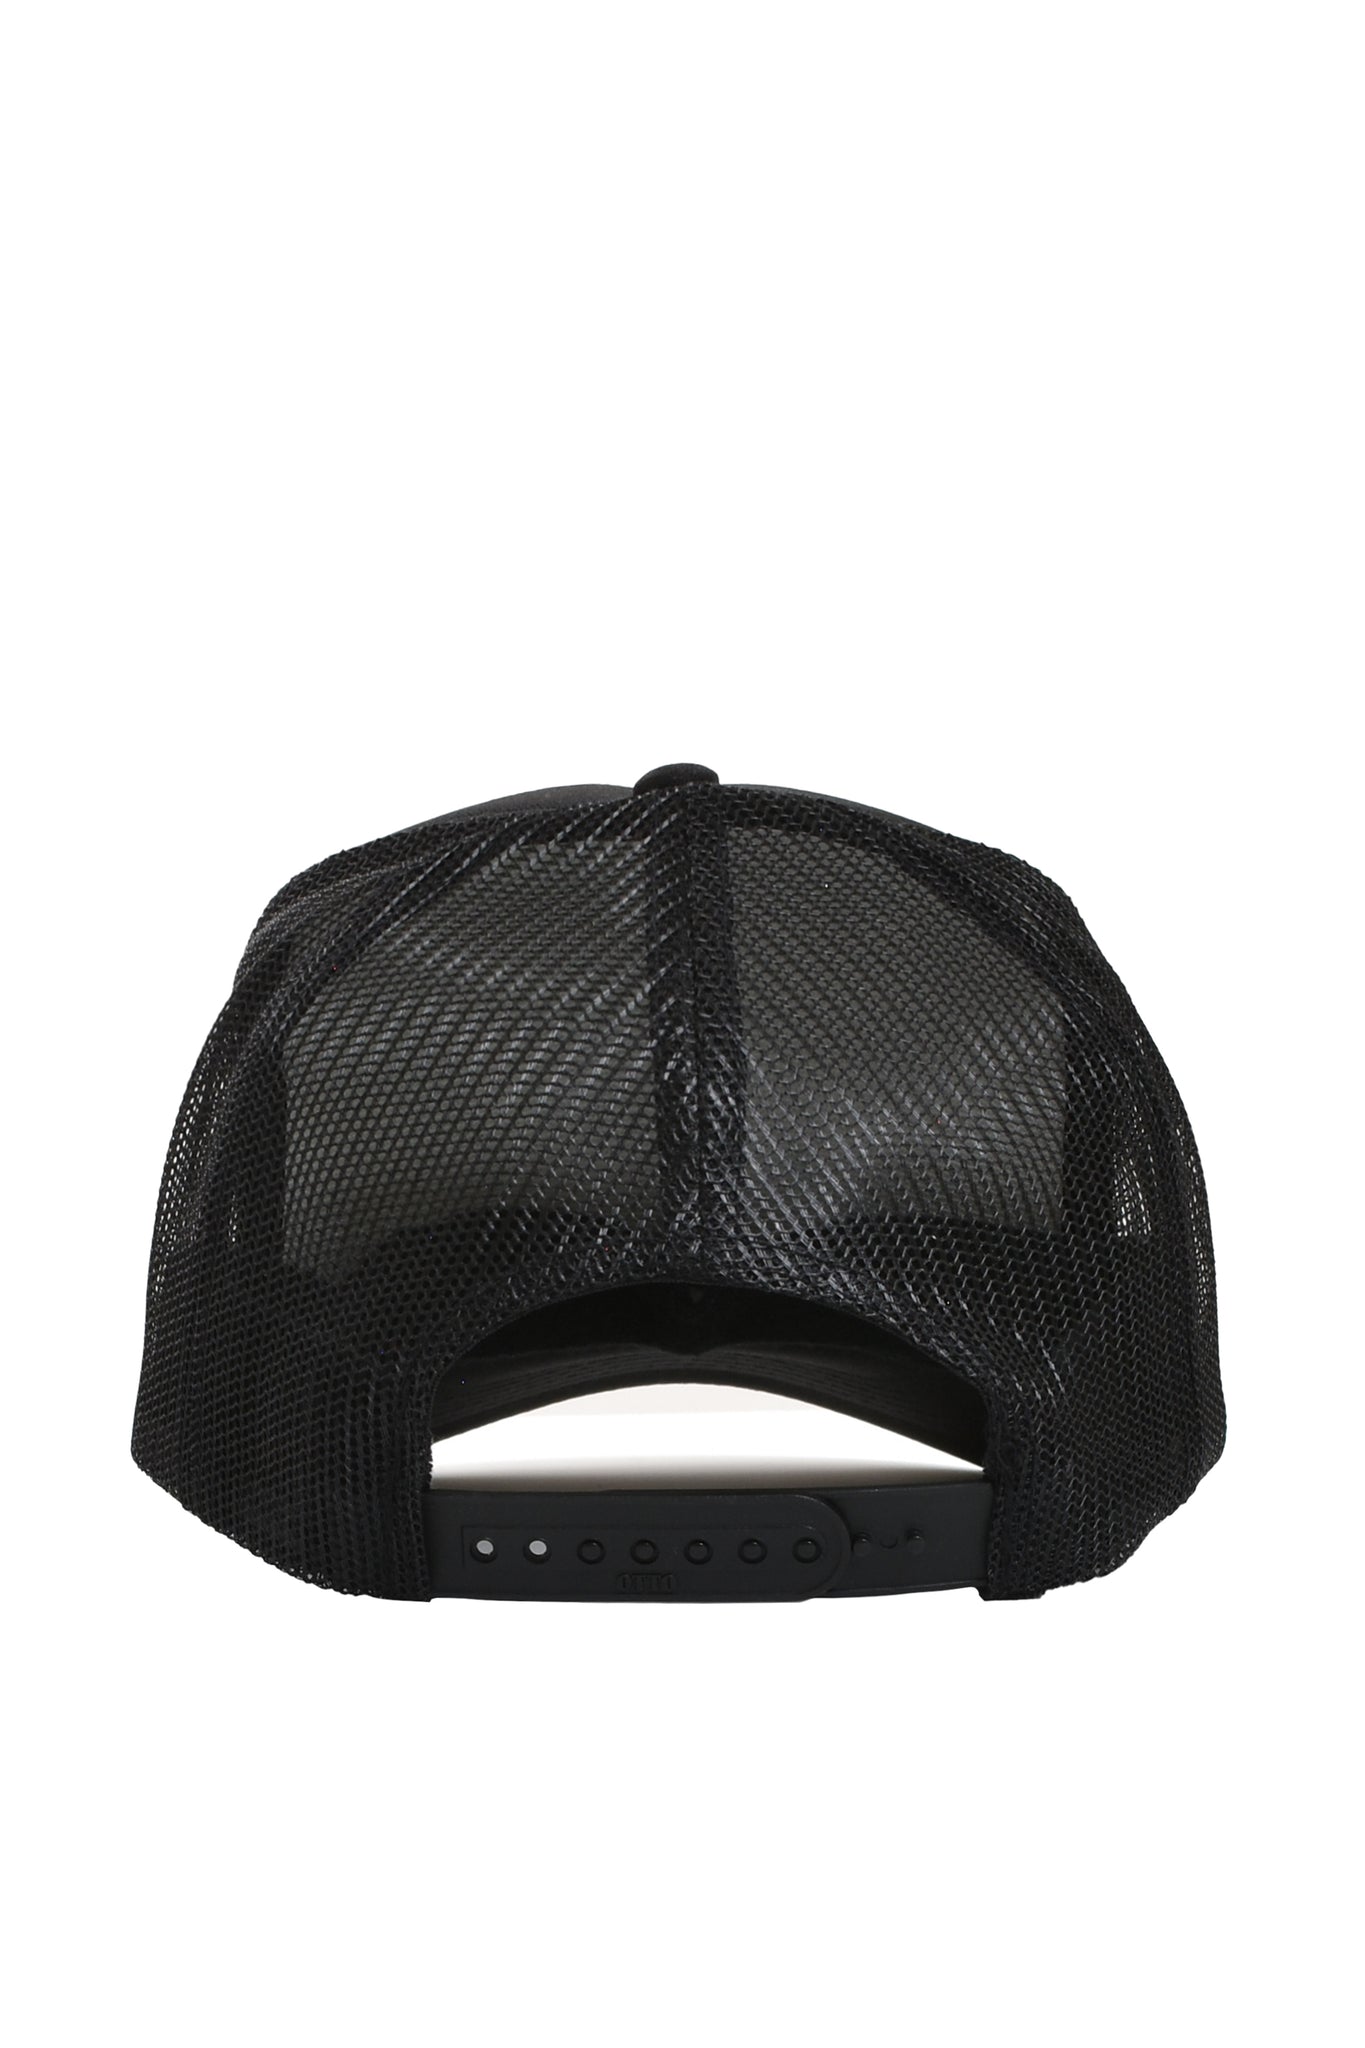 WING LOGO 3D MESH CAP / BLACK BLACK